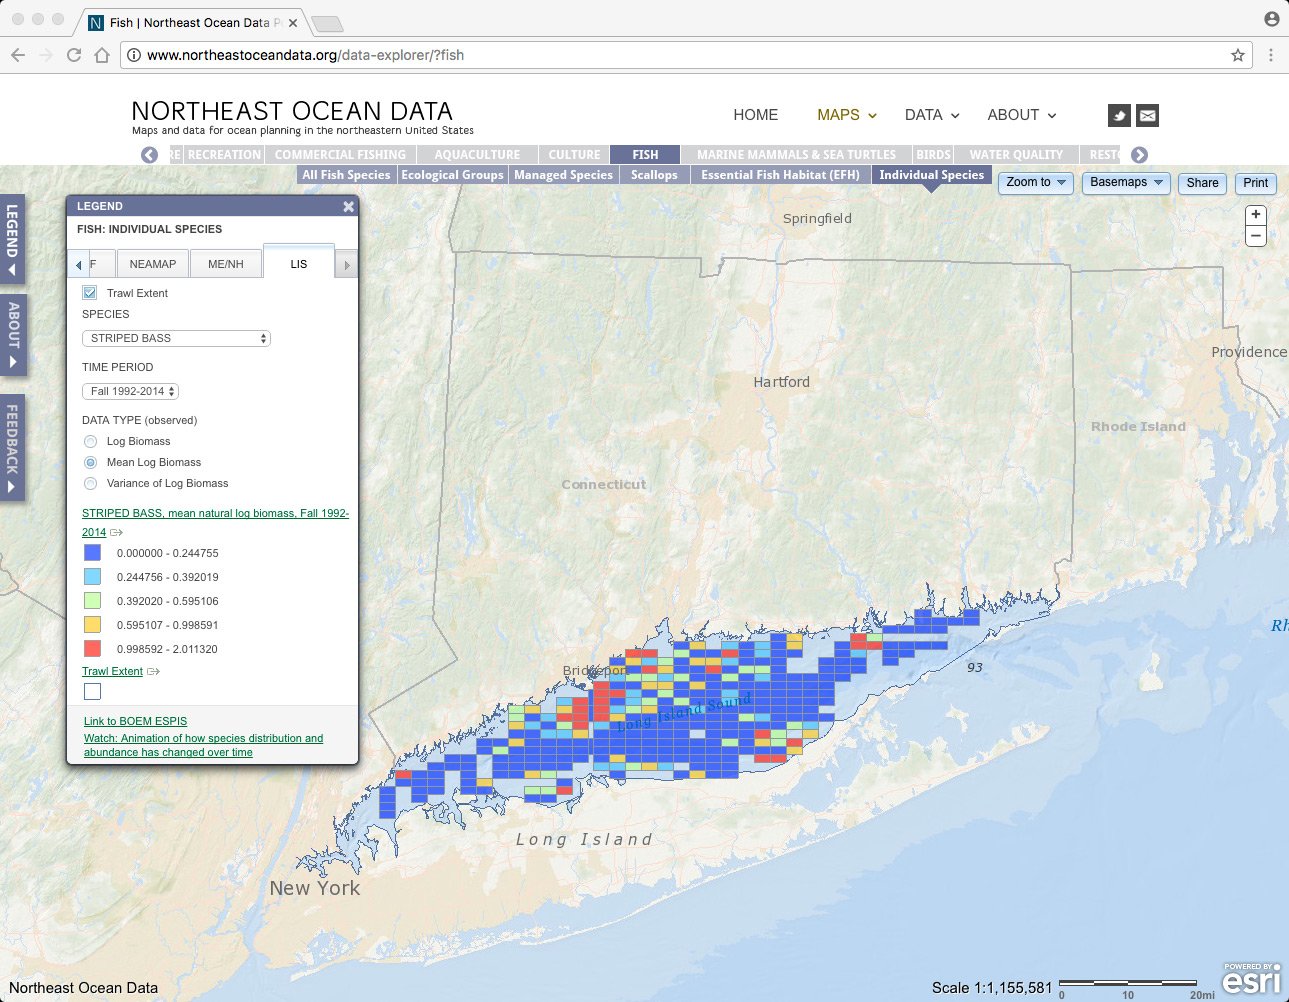 Screenshot of map showing striped bass biomass in Long Island Sound